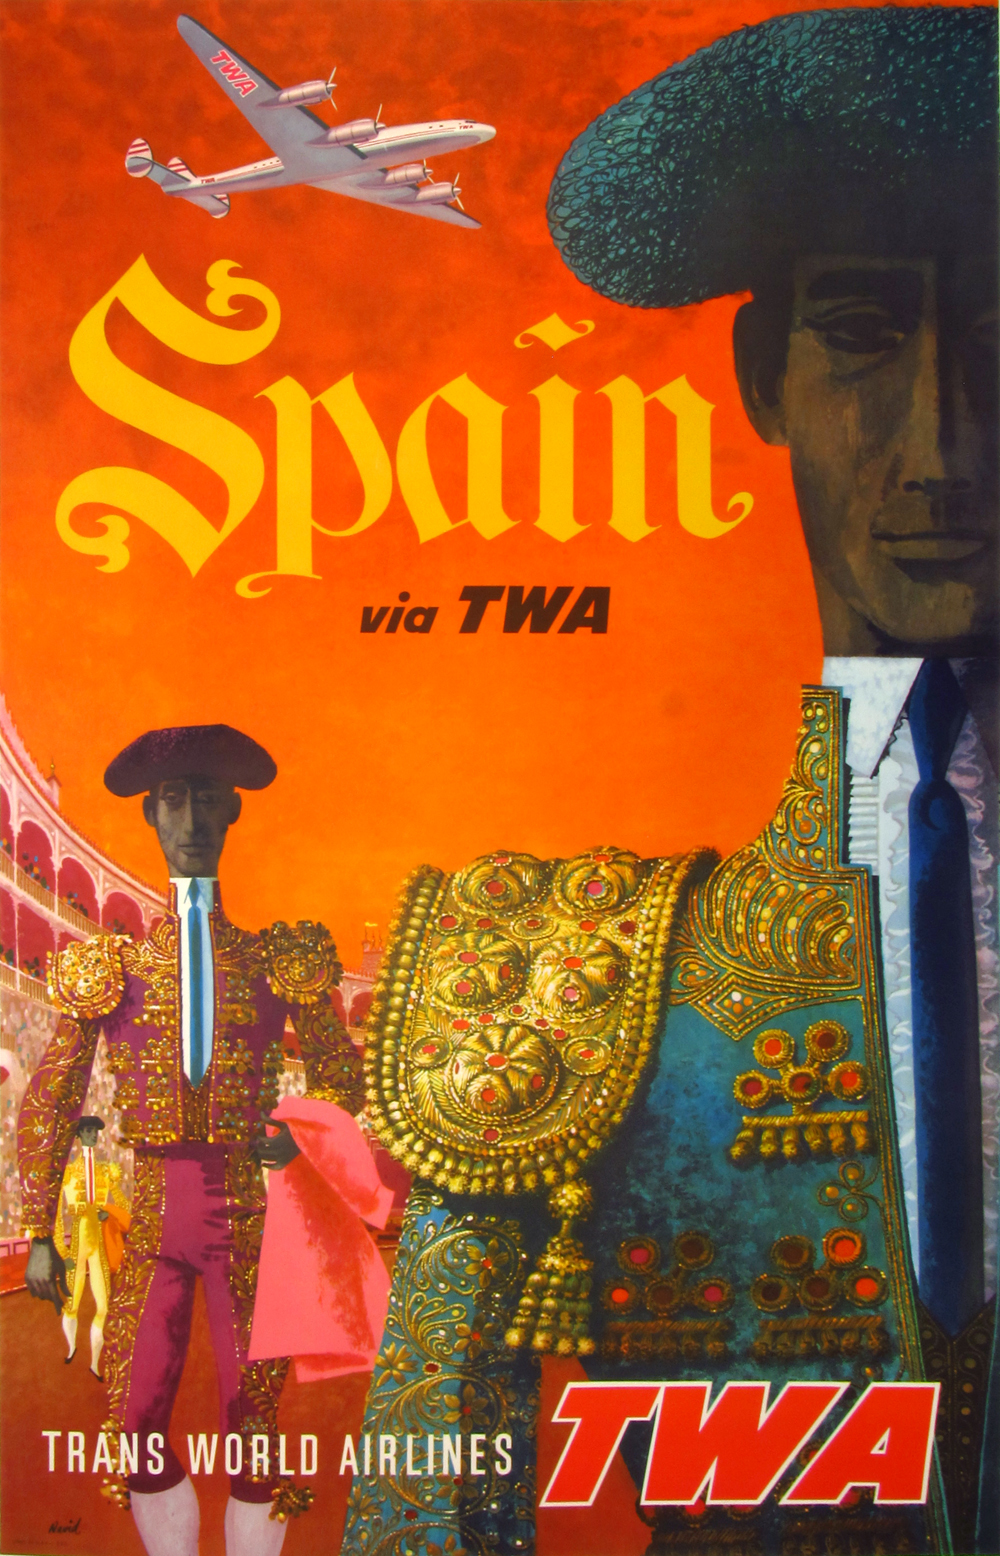 Spain via TWA